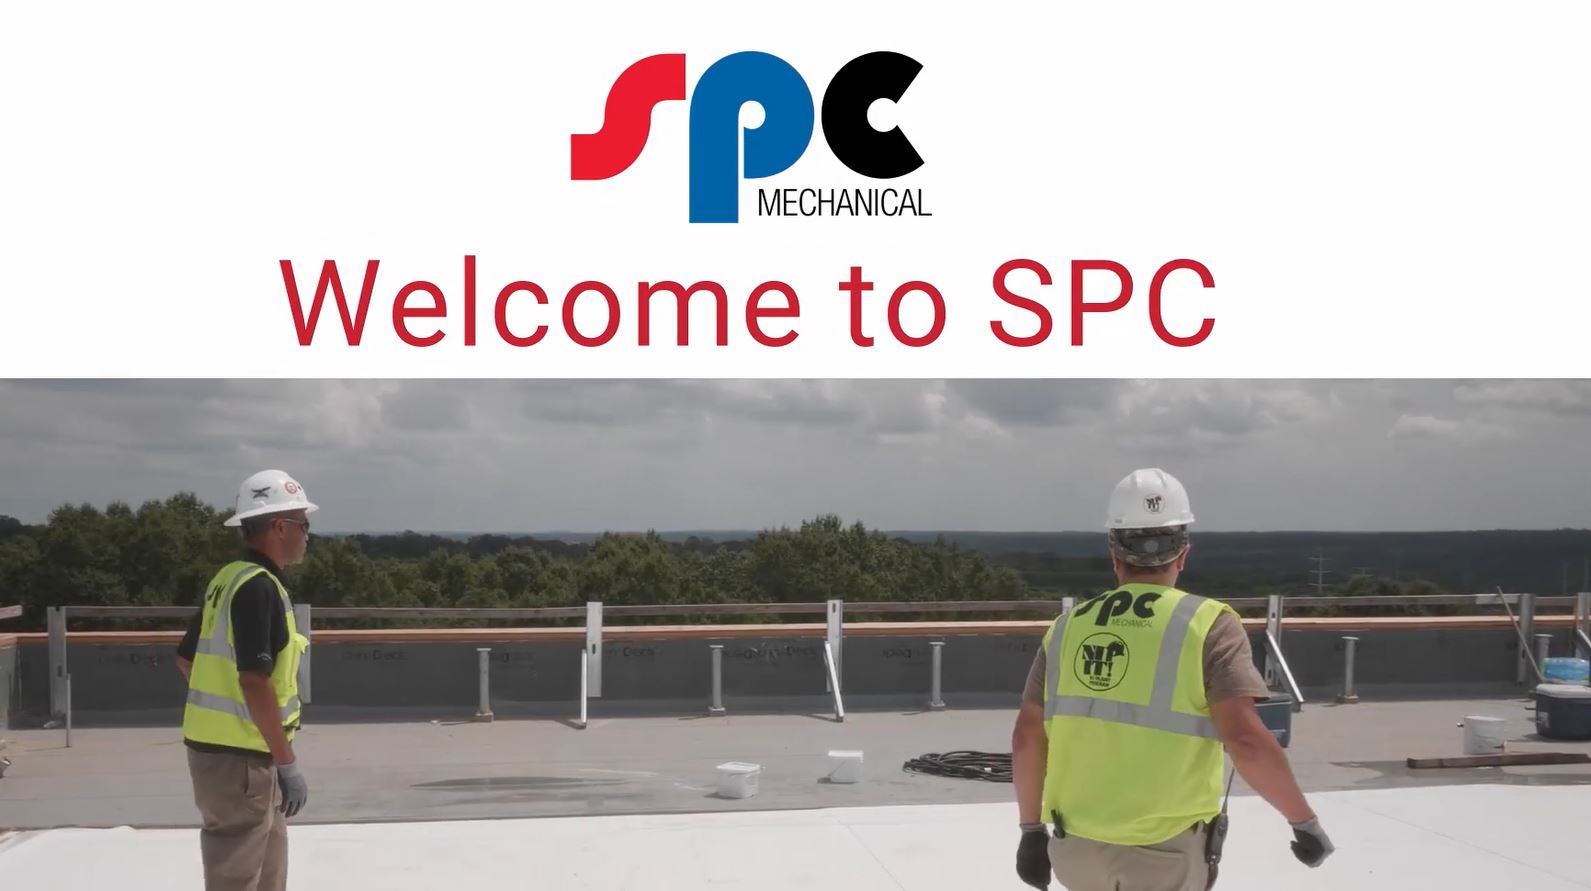 SPC Mechanical Welcome to SPC